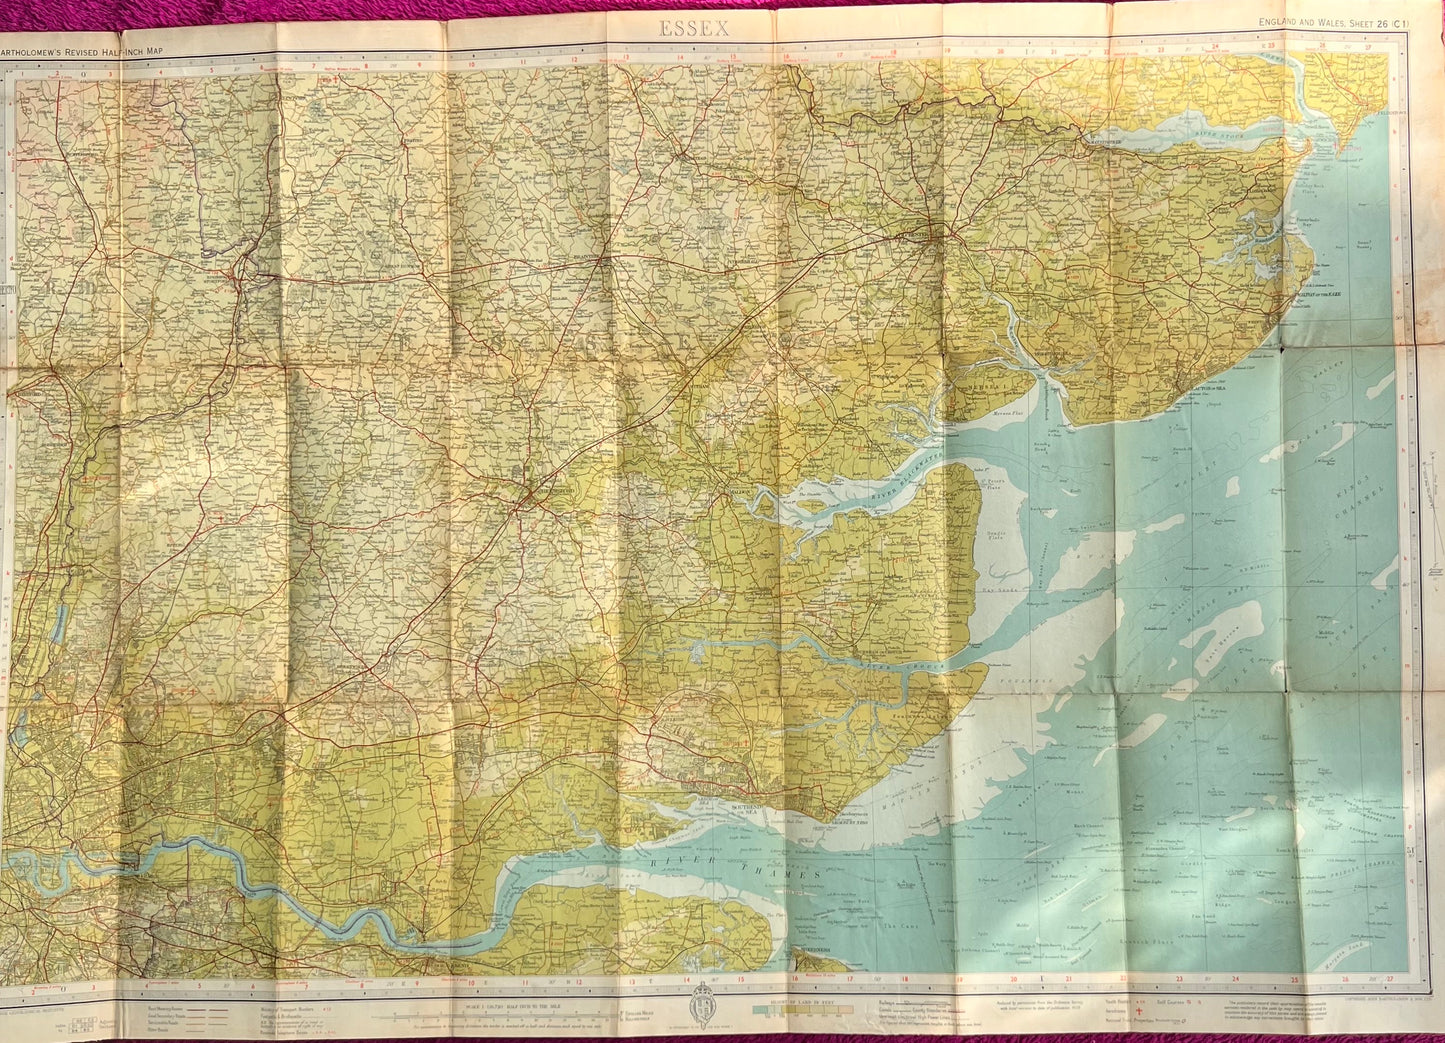 1930s Map of Essex -Bartholomew's, Cloth Backed.